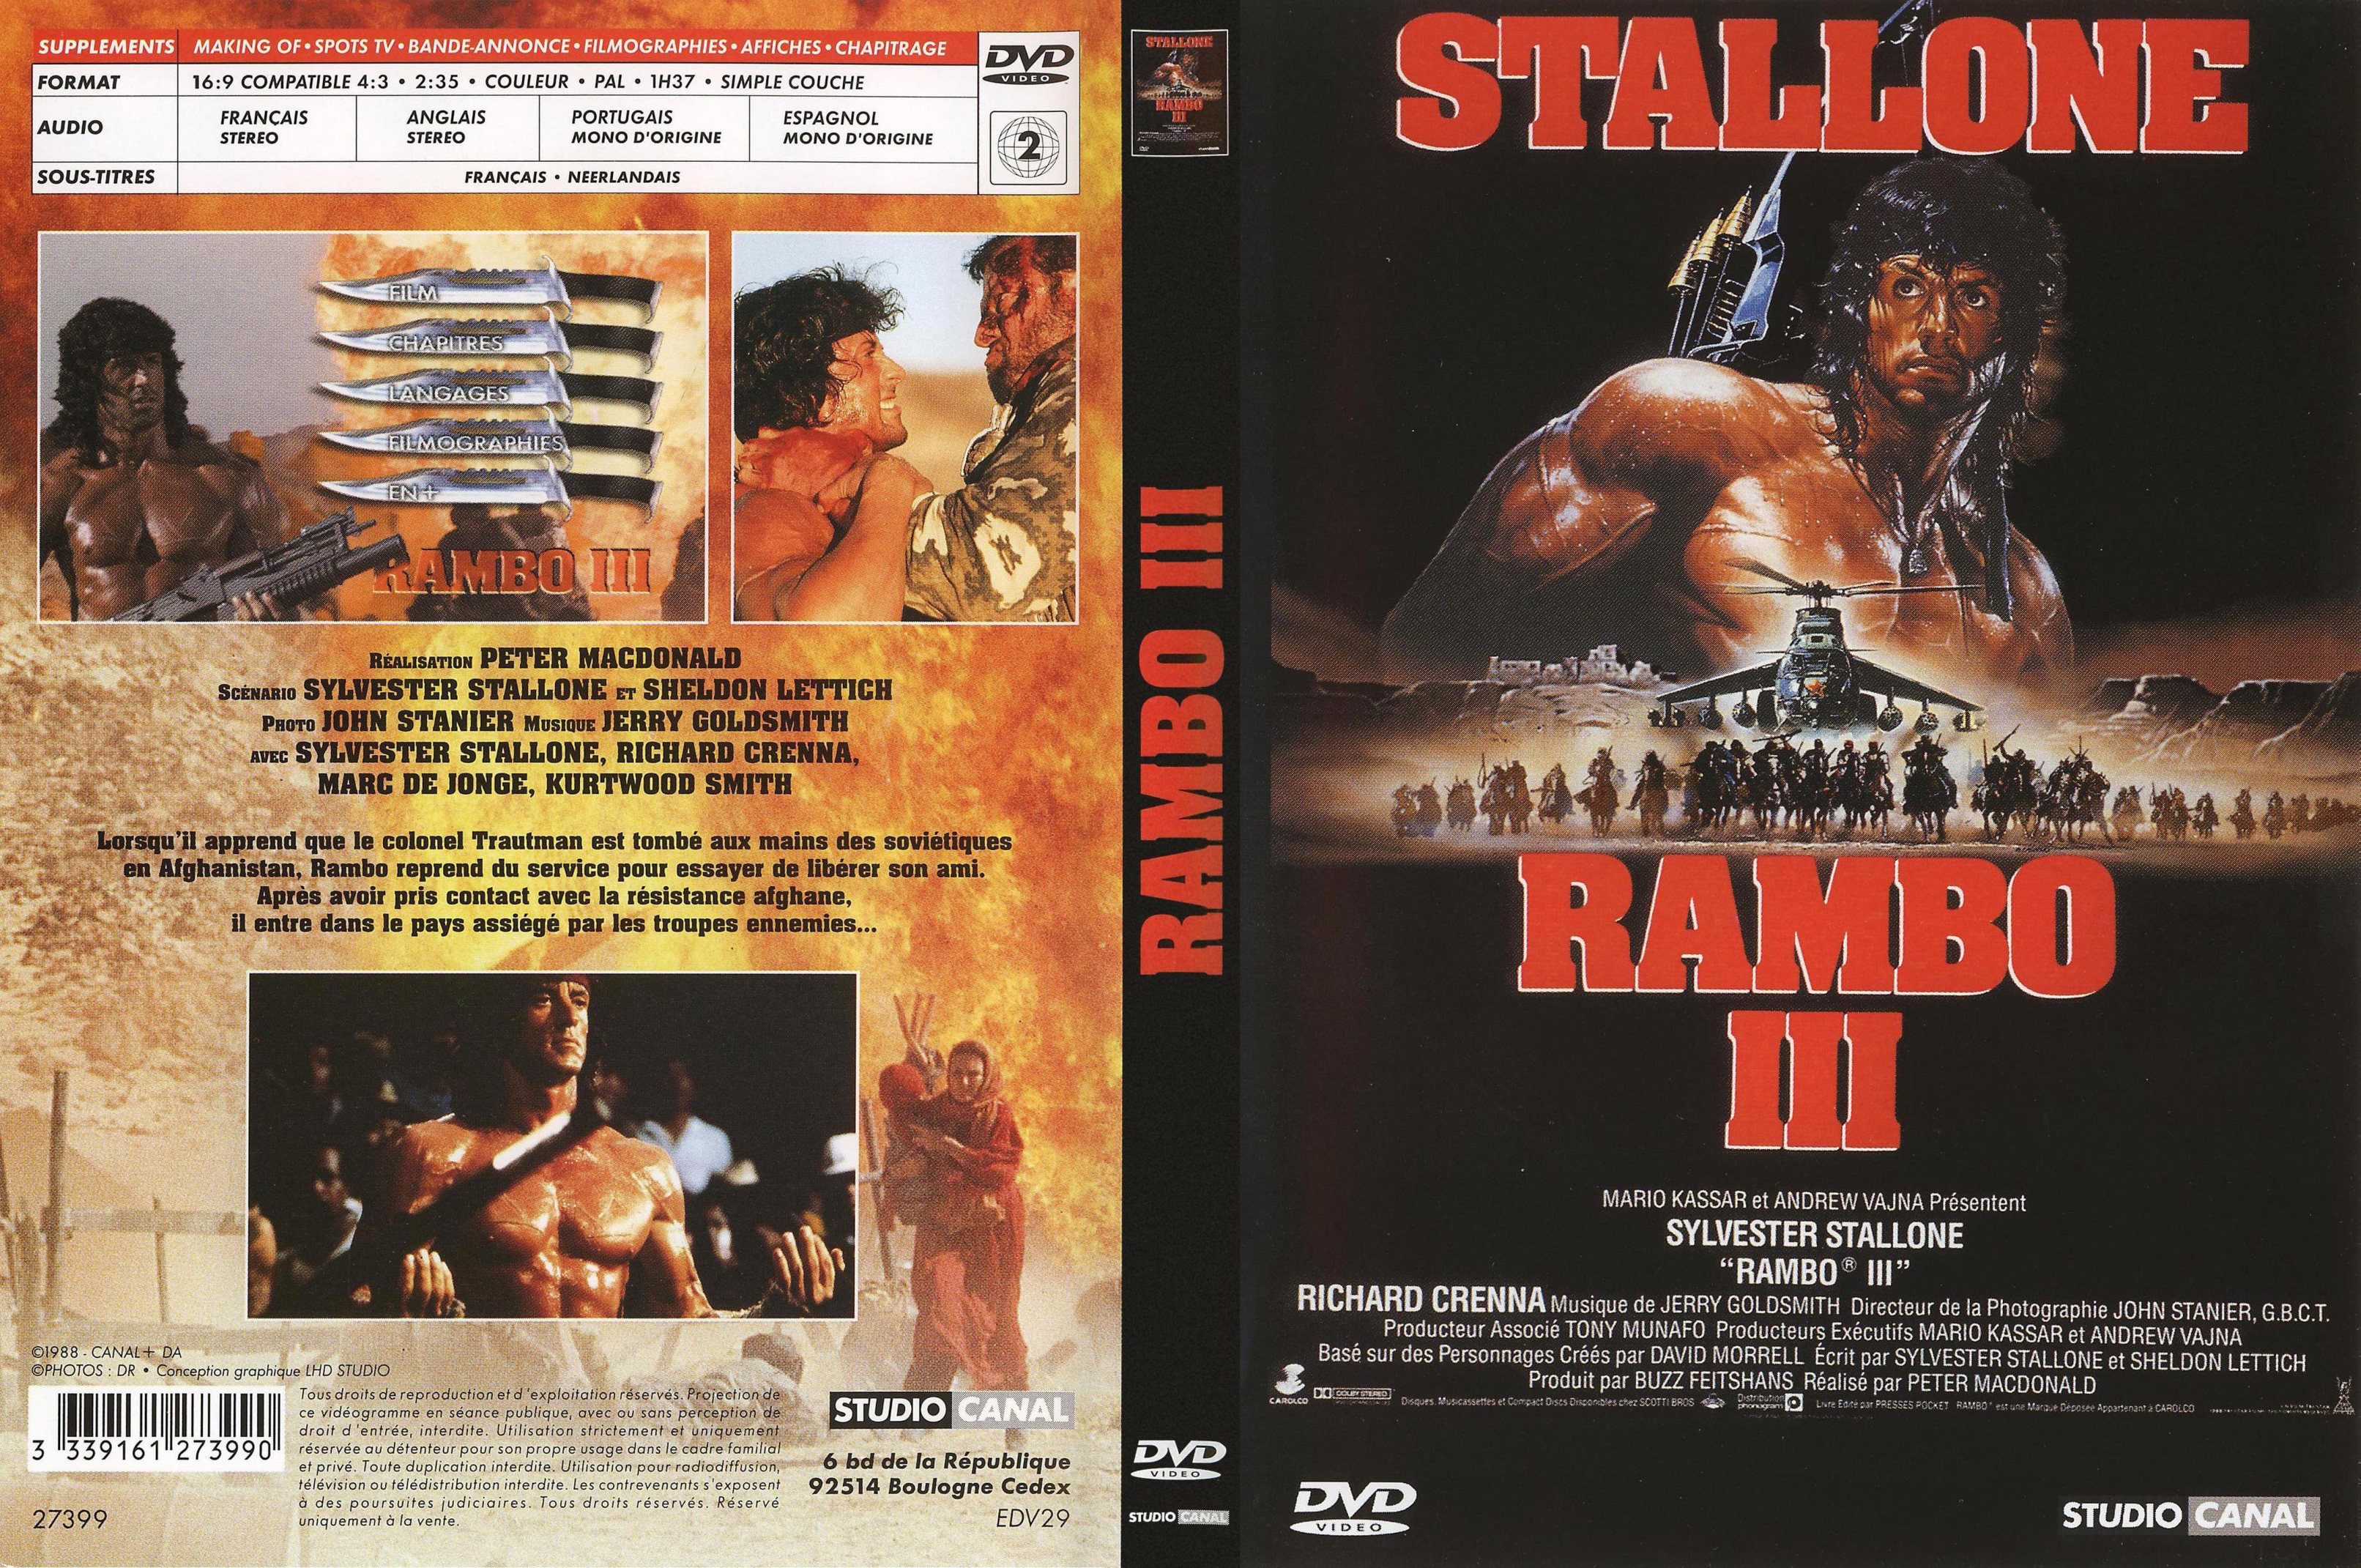 Jaquette DVD Rambo 3